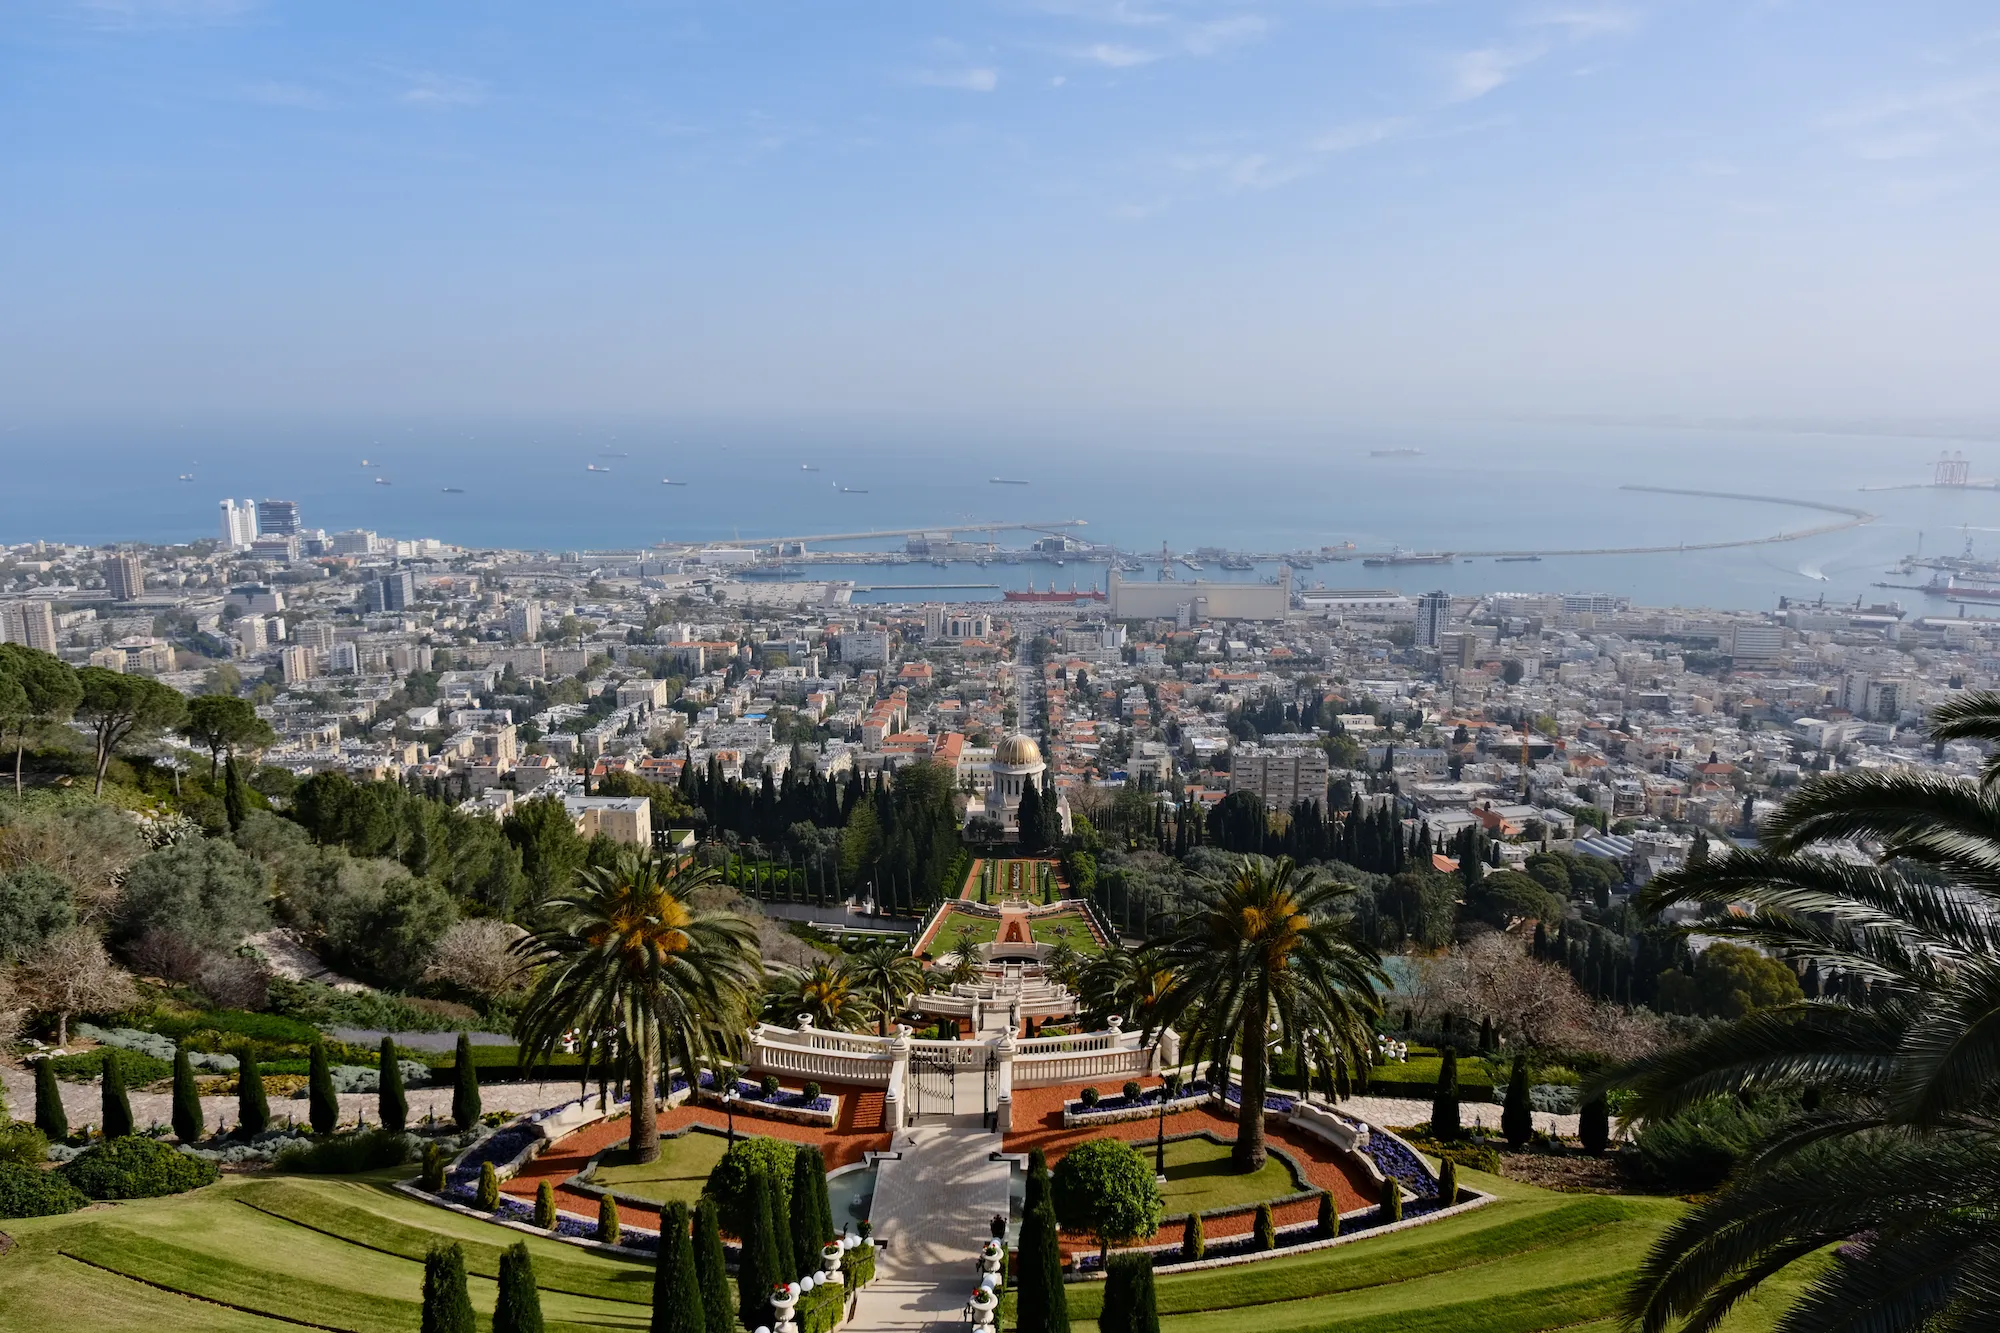 The Bahai Gardens of Haifa